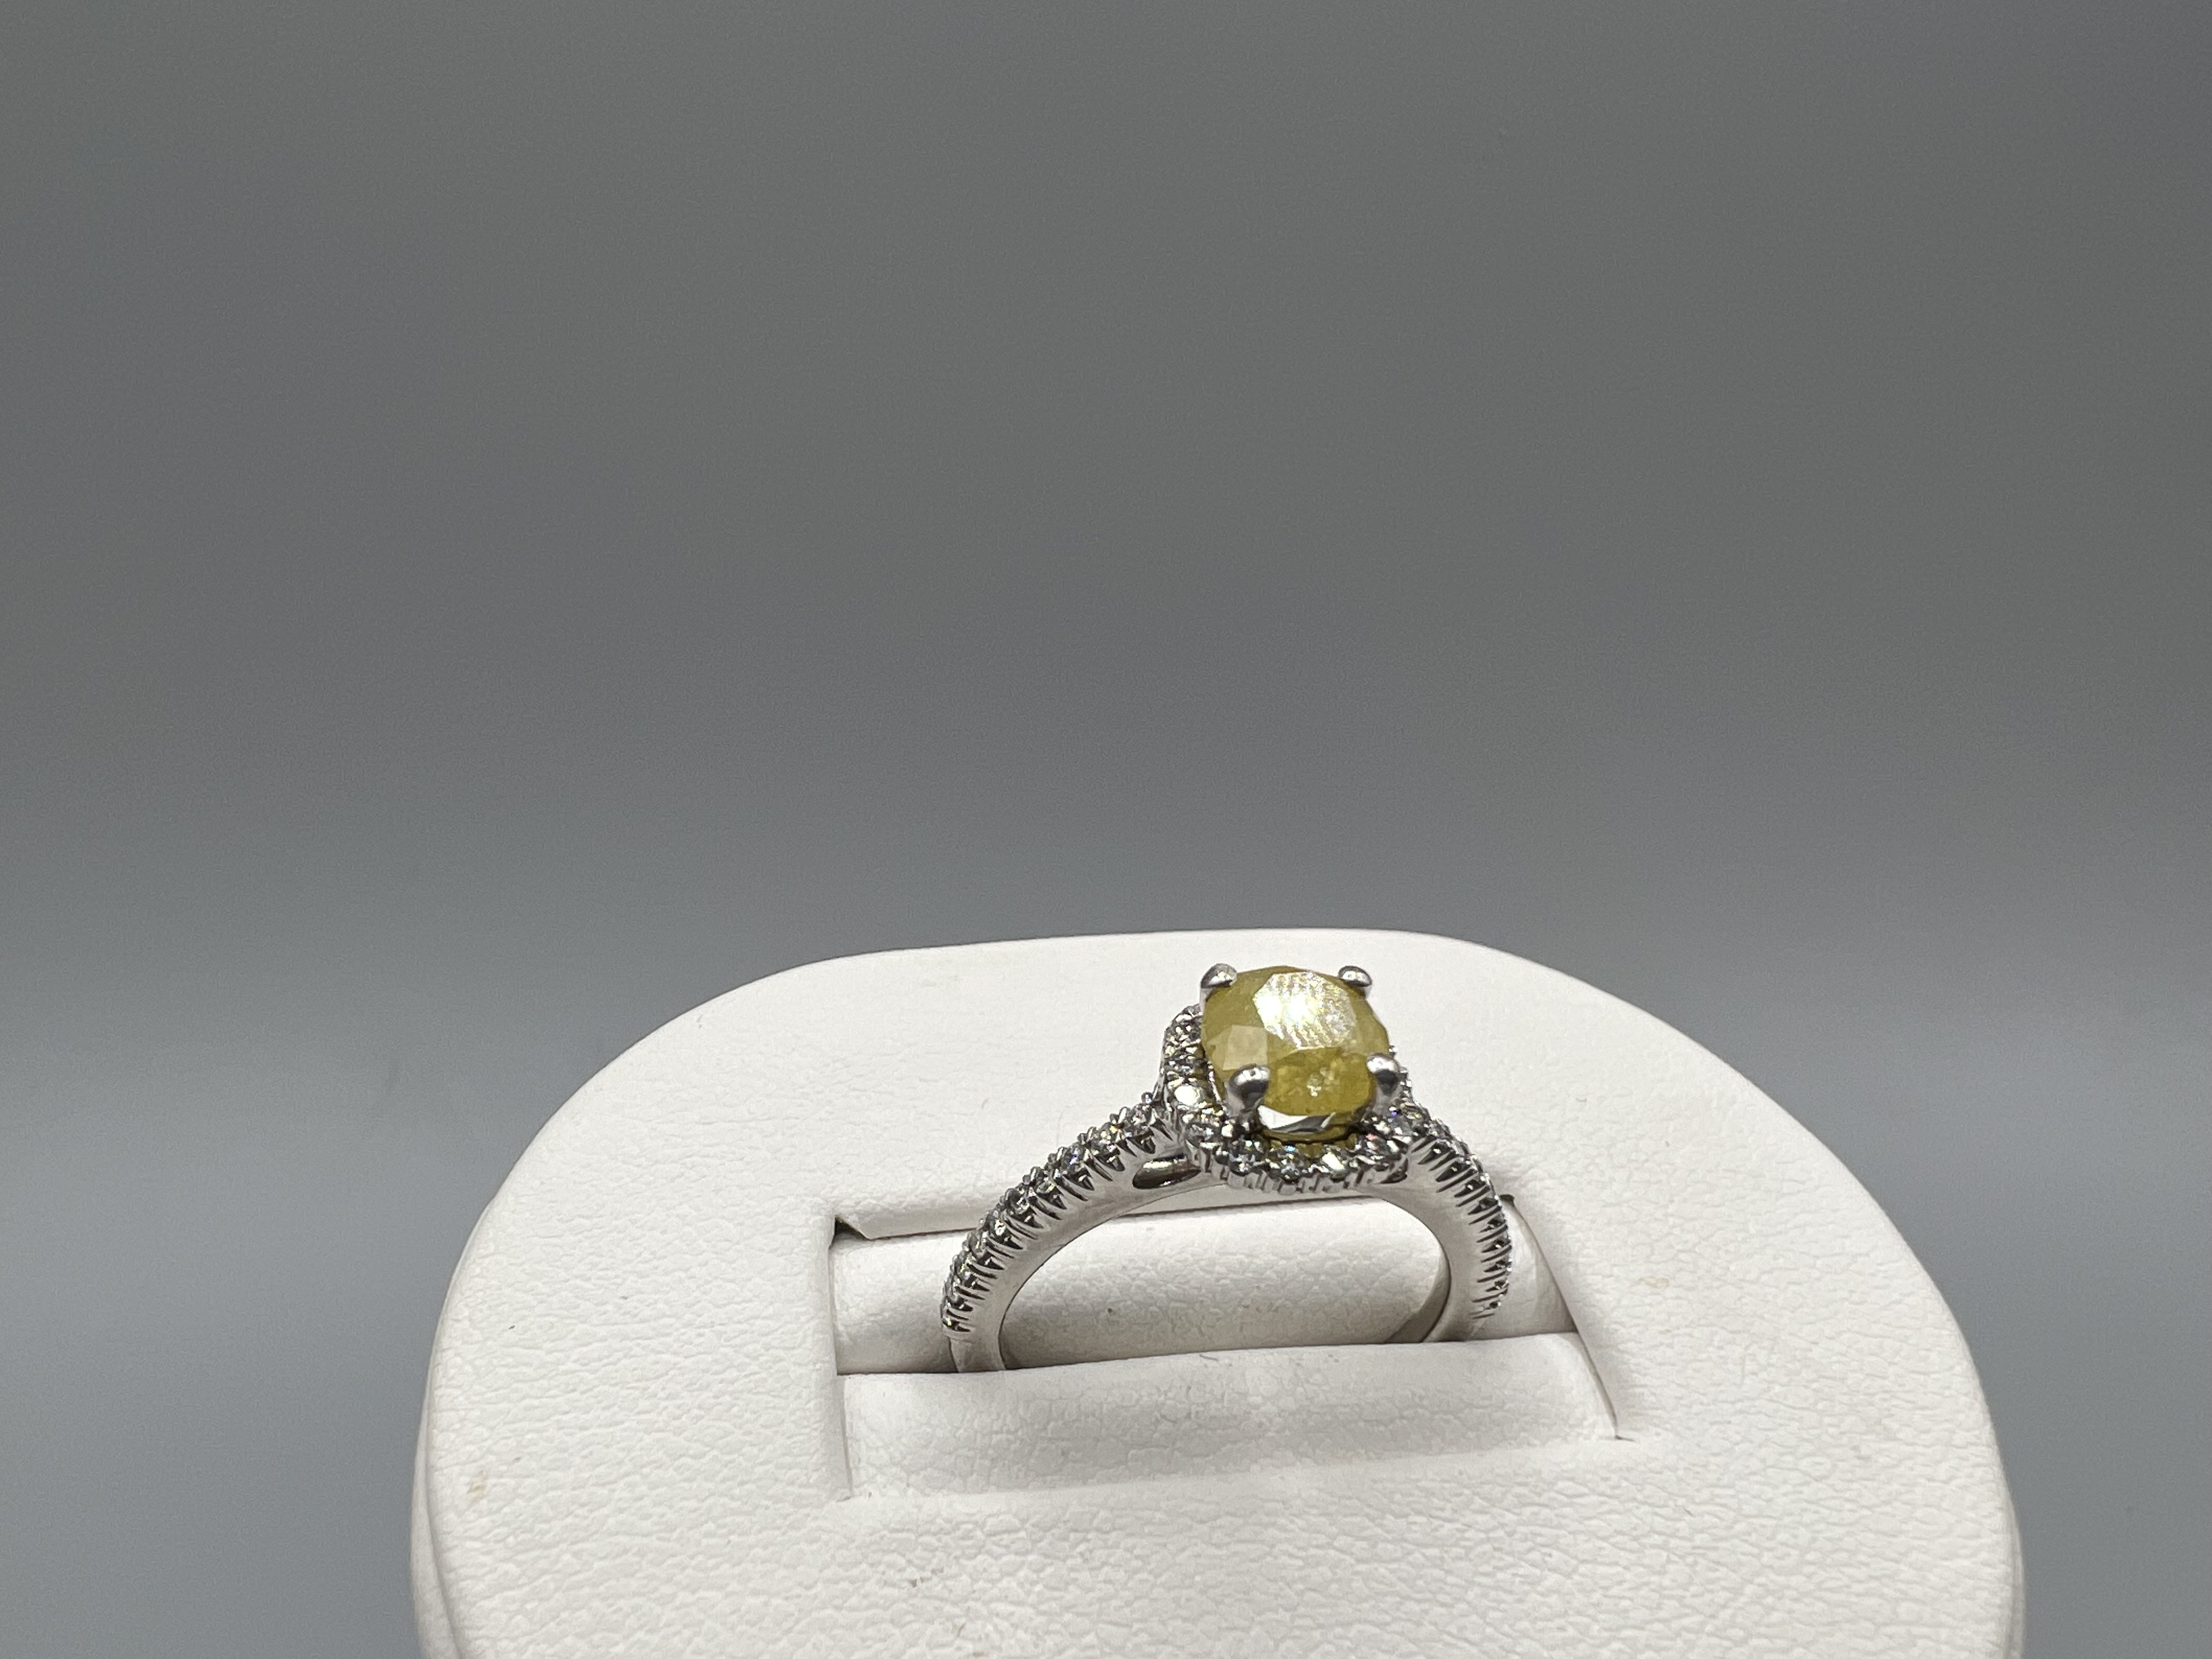 0.97ct Natural Fancy Intense Yellow Certified Diamond Ring in 14ct White Gold & Diamond Mount -